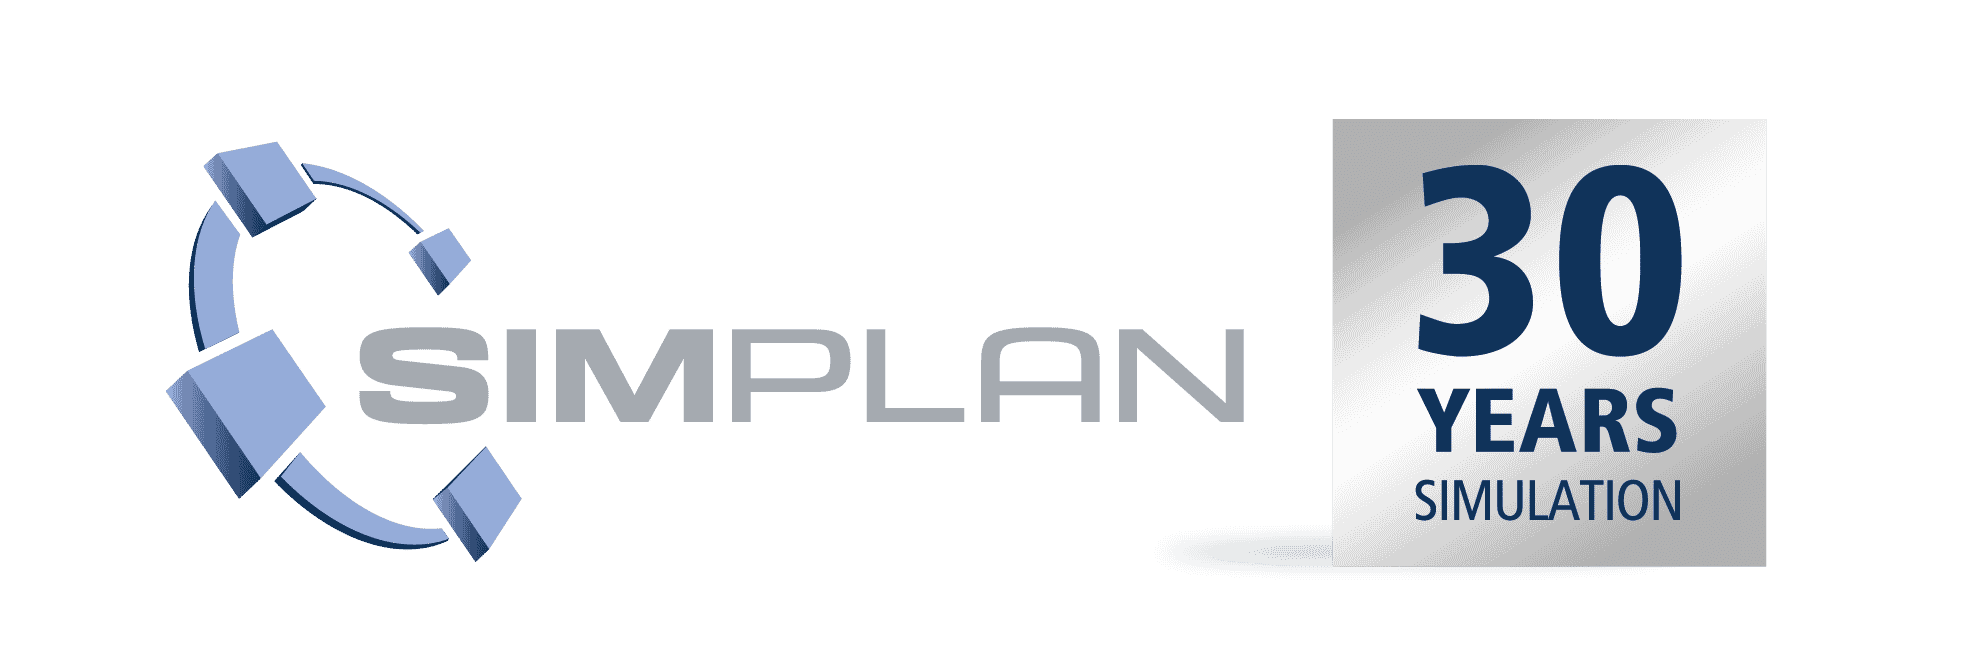 SimPlan-Logo_30Years-EN